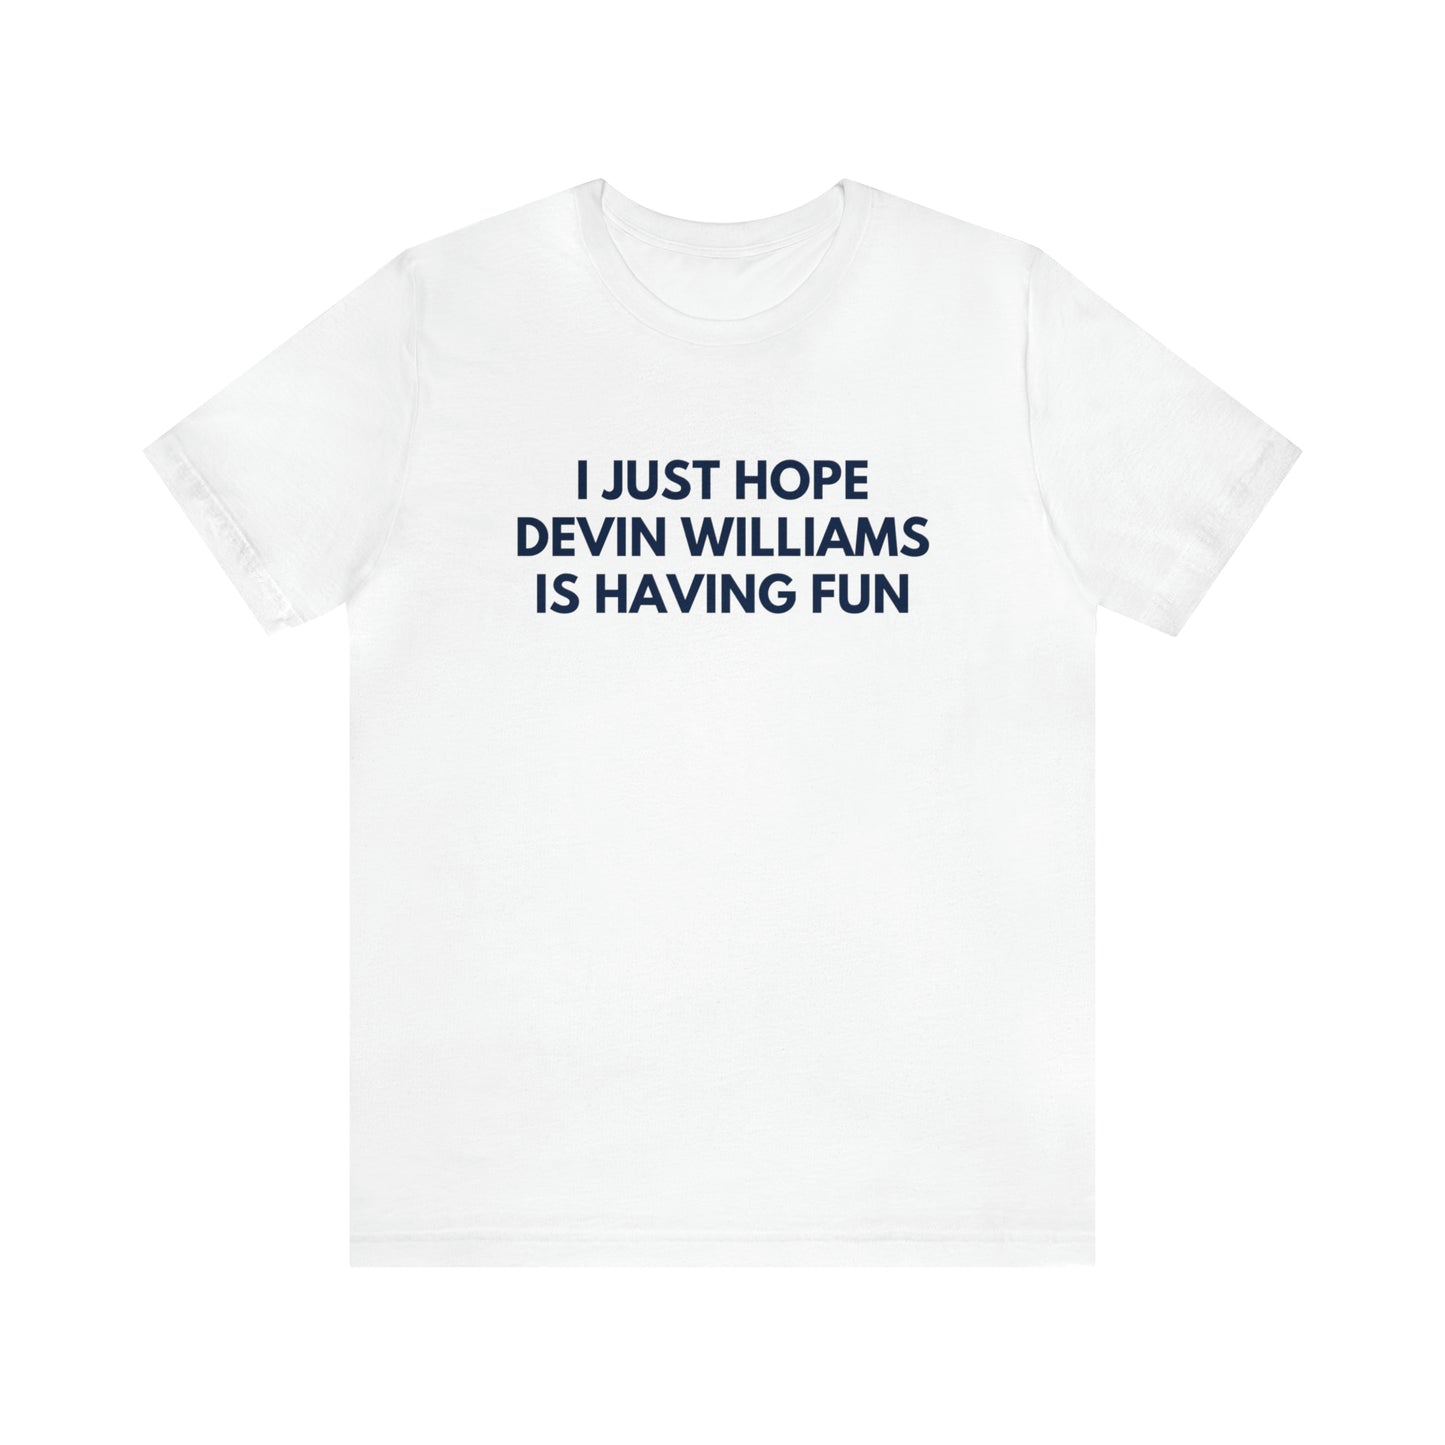 Devin Williams Having Fun - Unisex T-shirt